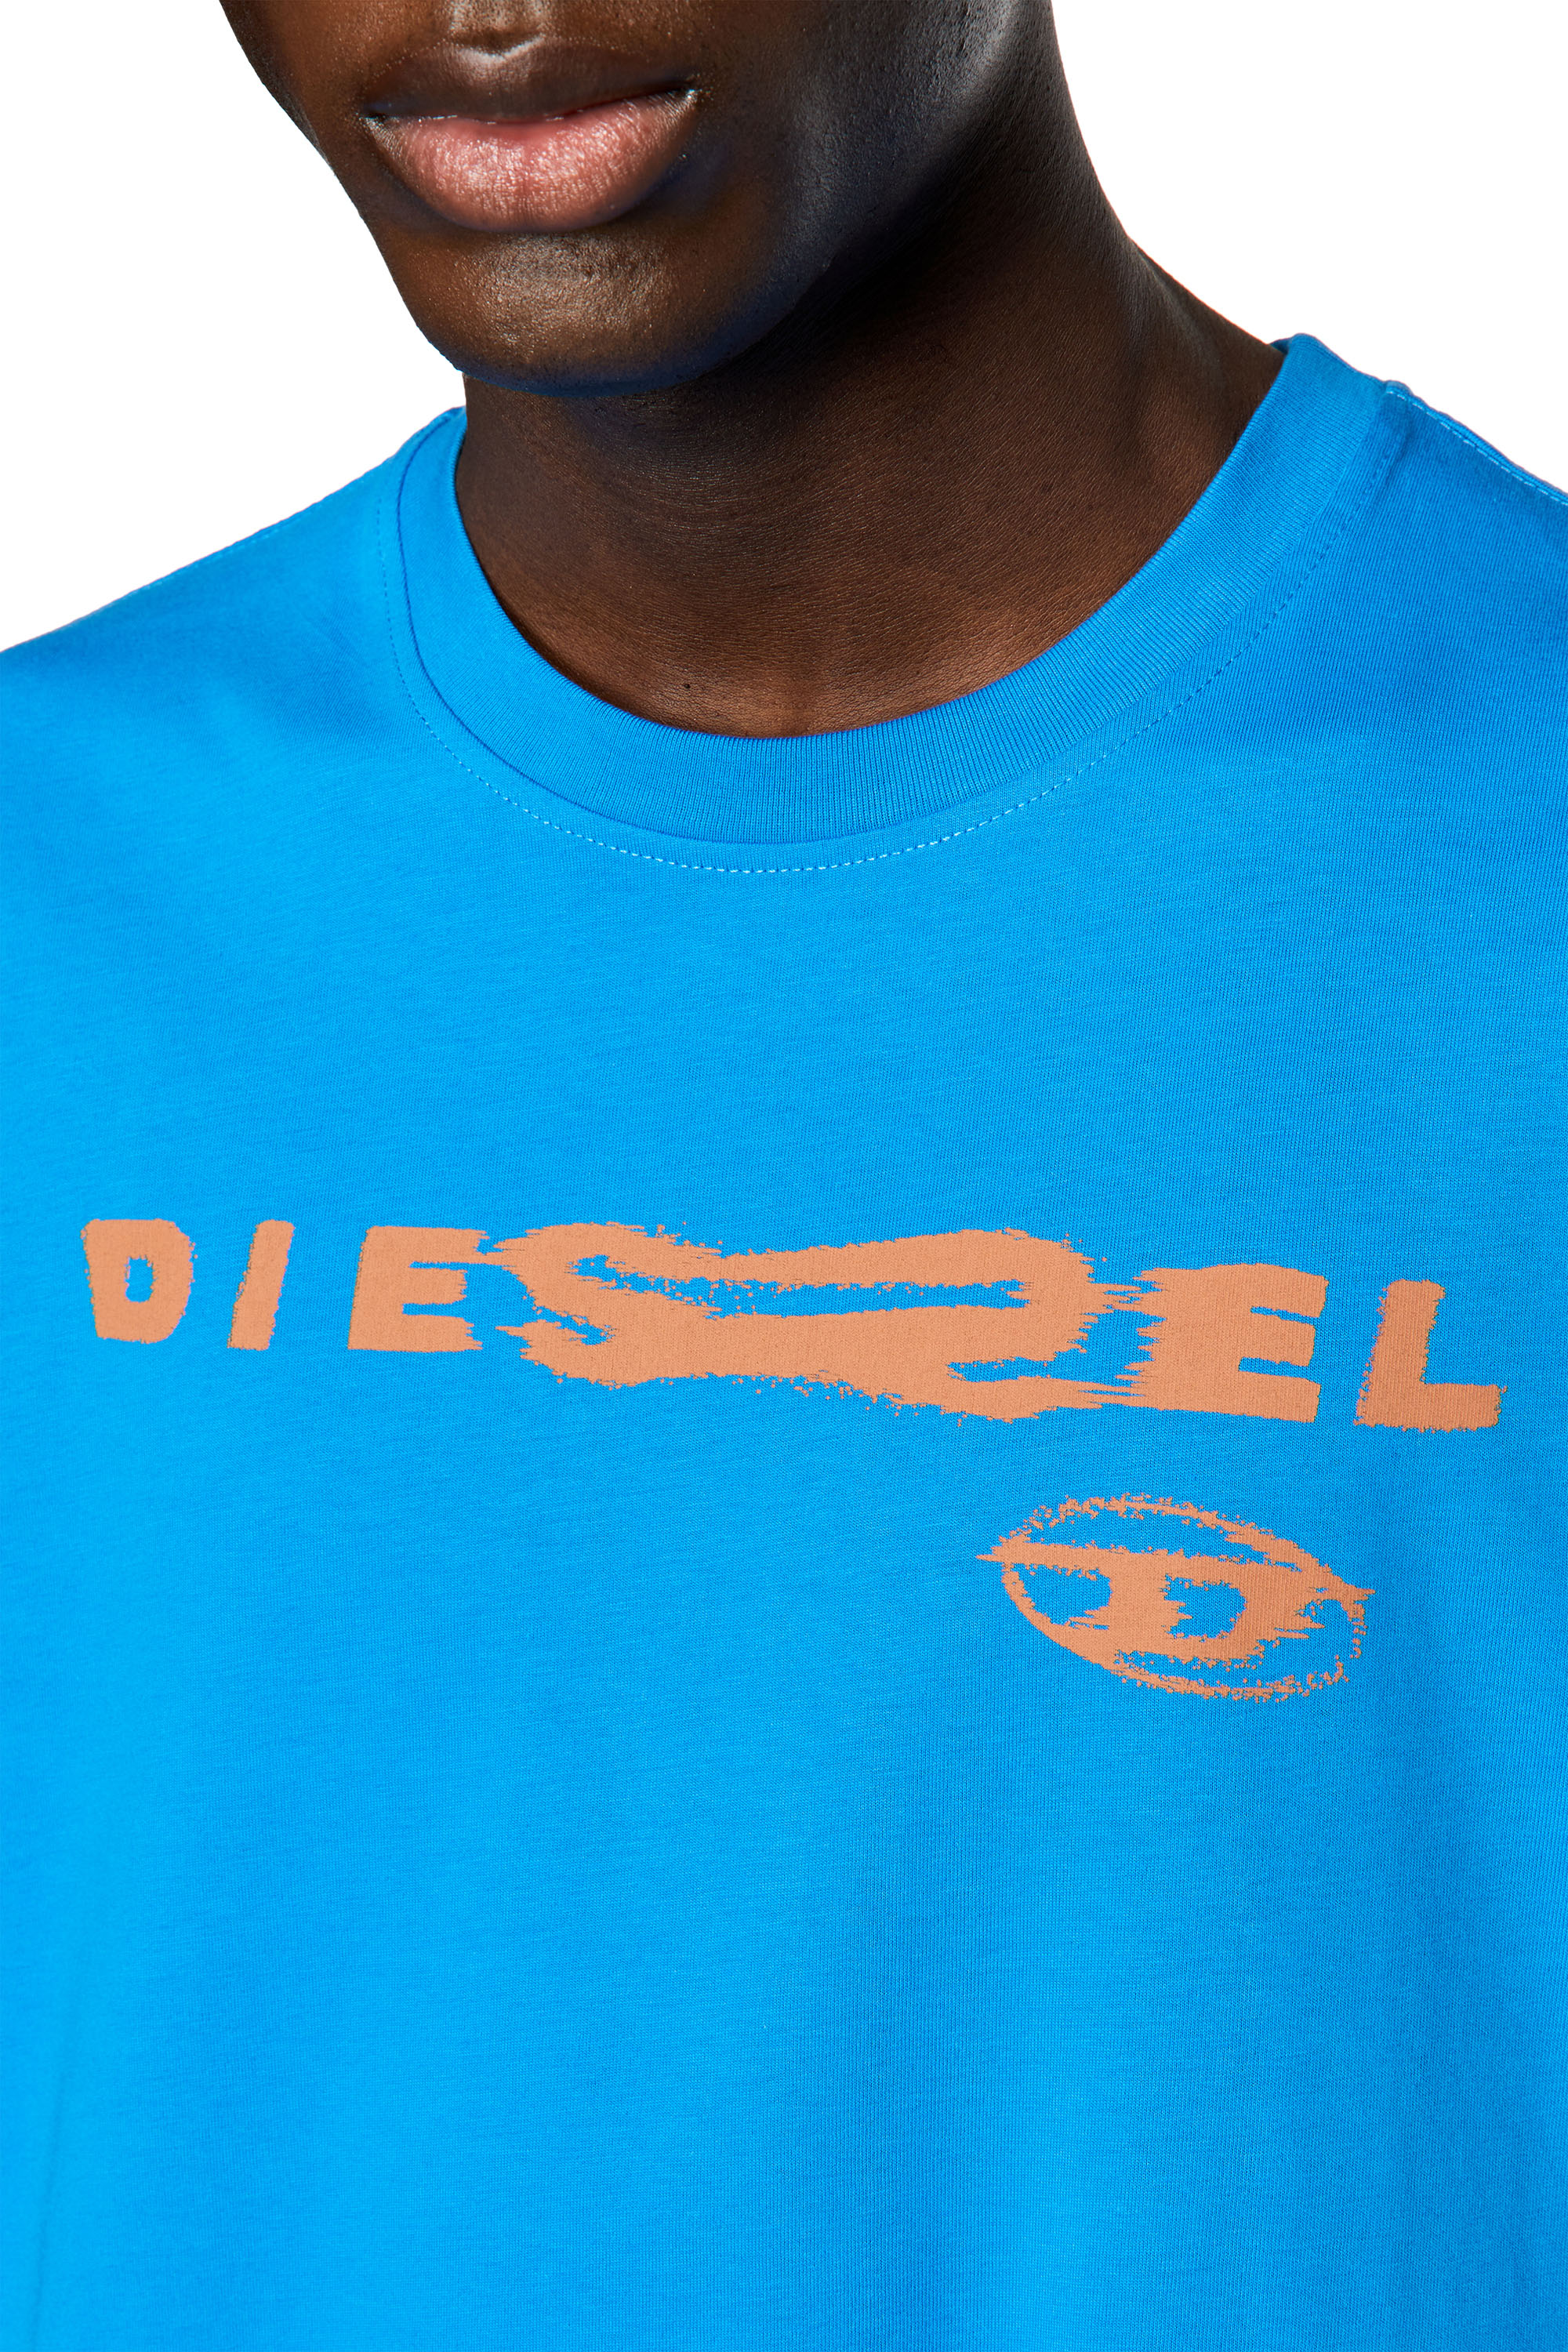 Diesel - T-JUST-G9, Blue - Image 5